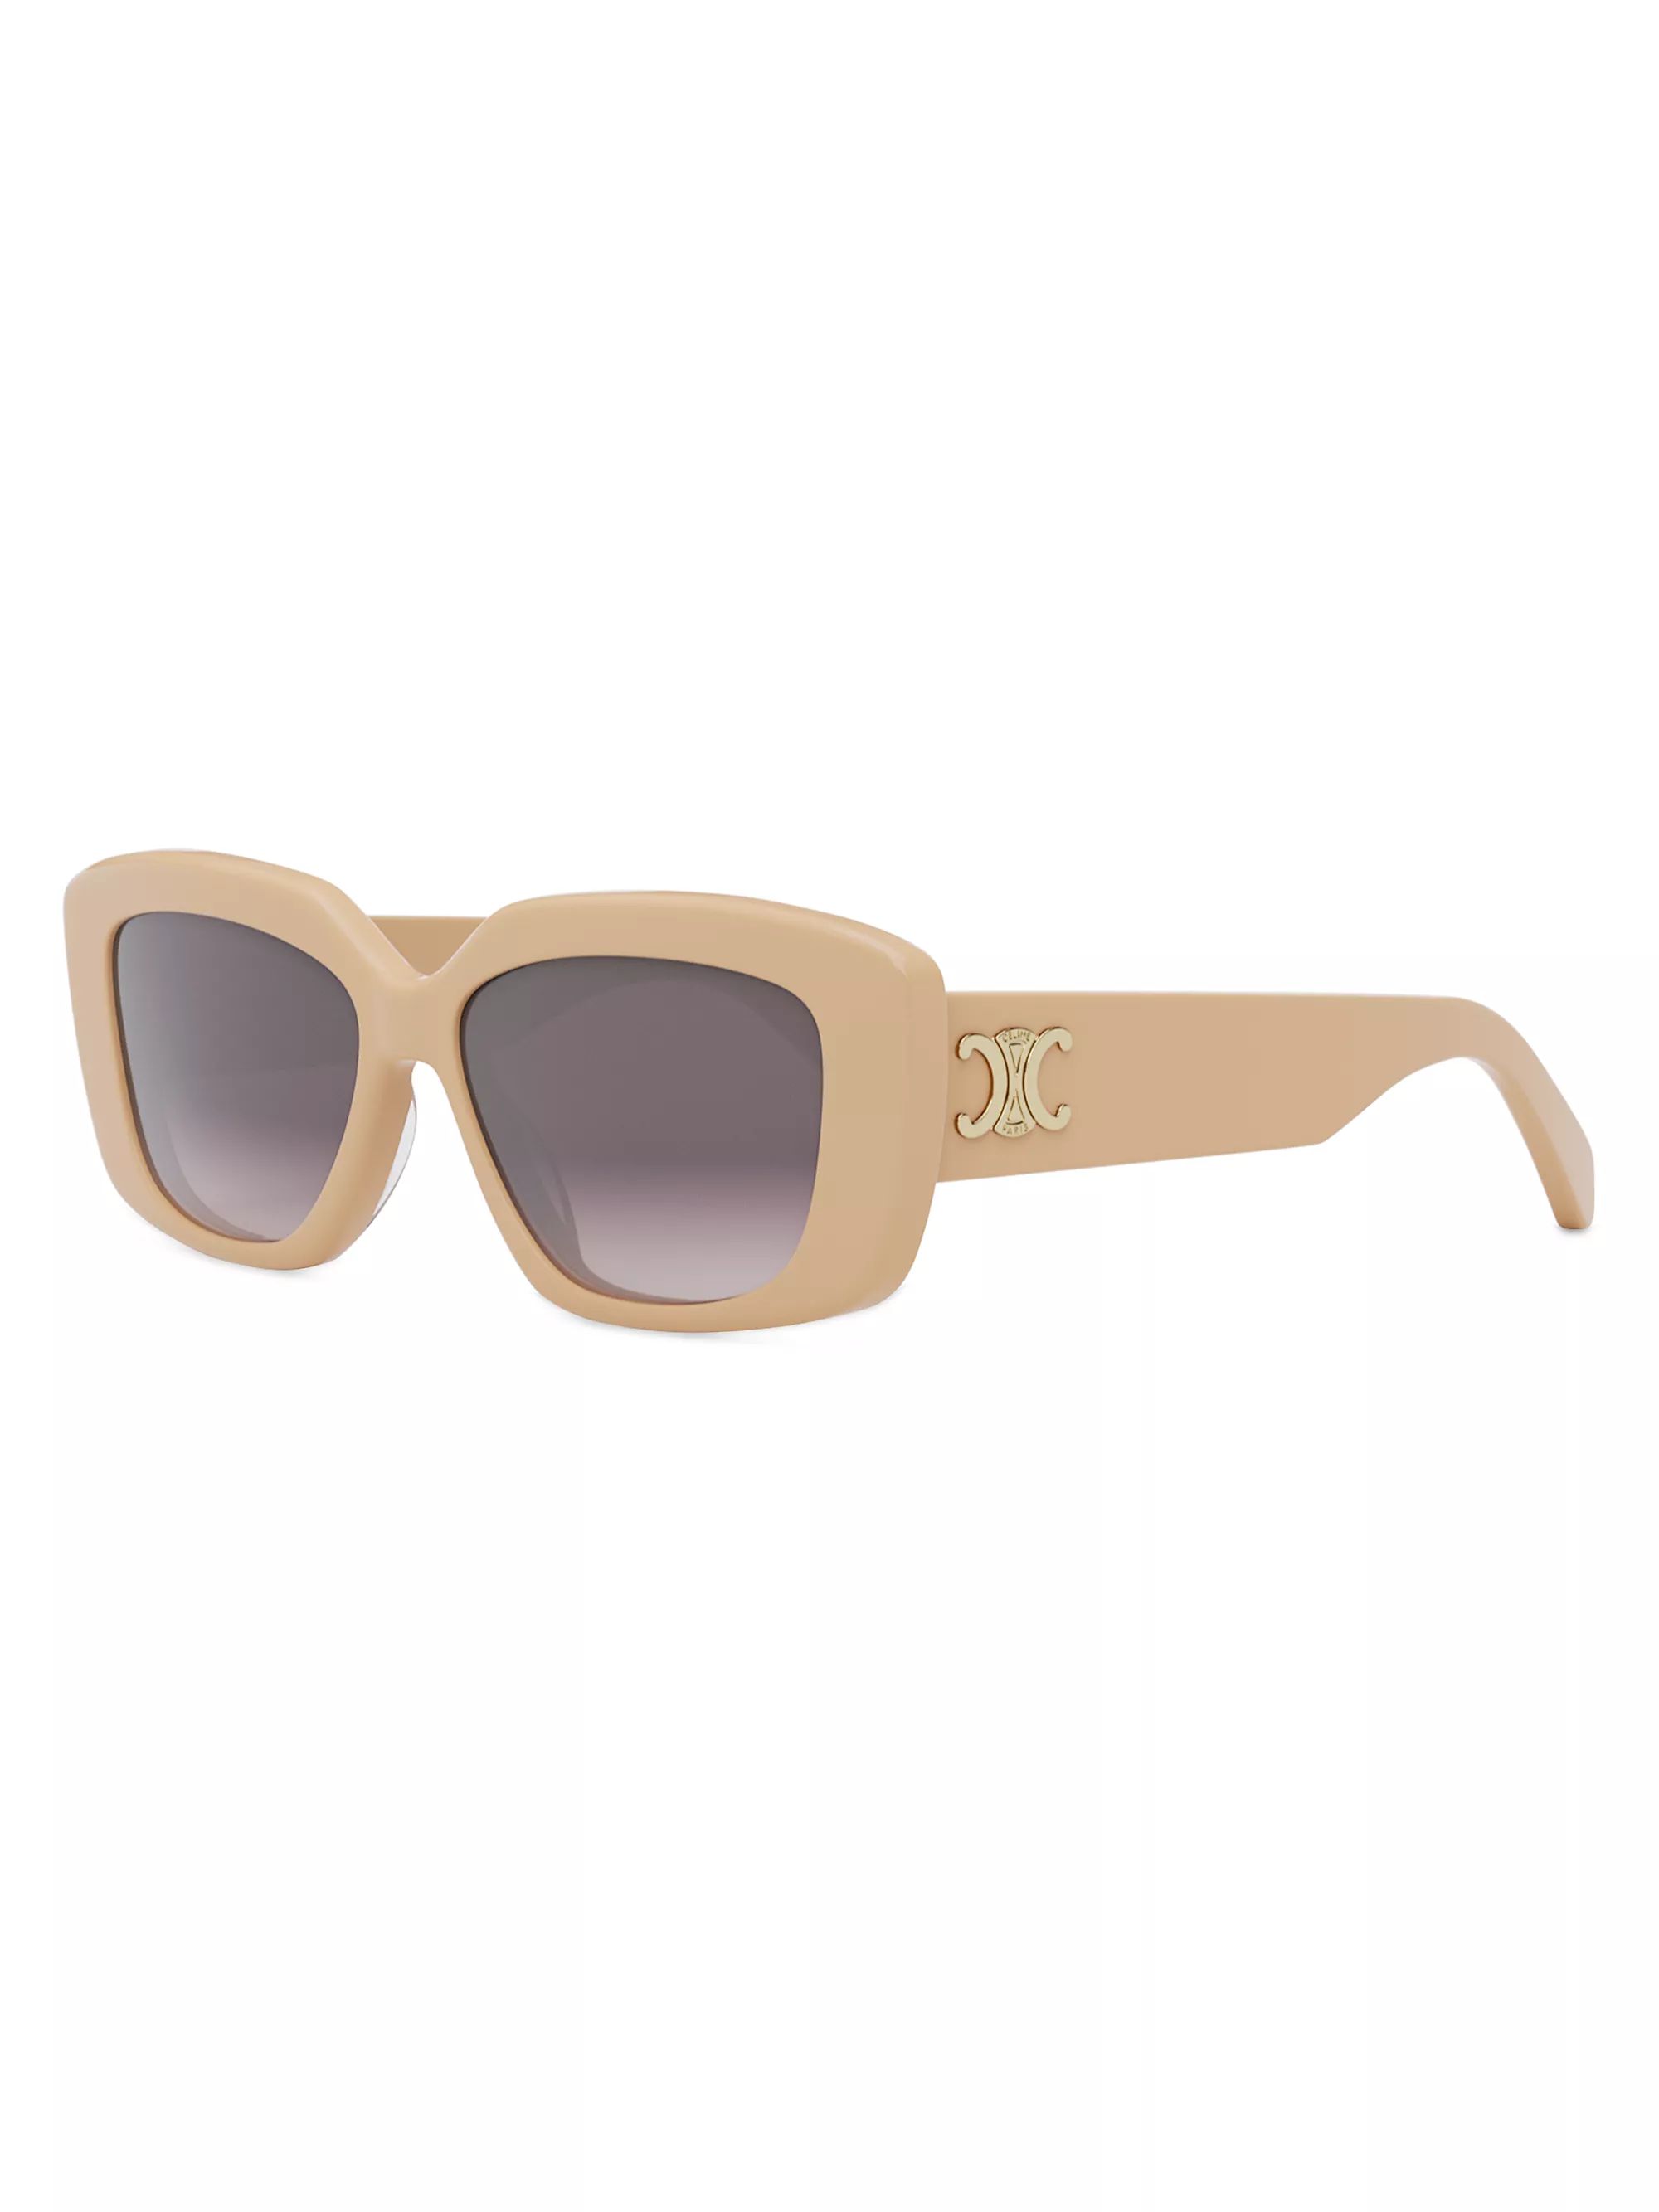 Shop CELINE Triomphe 55MM Geometric Sunglasses | Saks Fifth Avenue | Saks Fifth Avenue